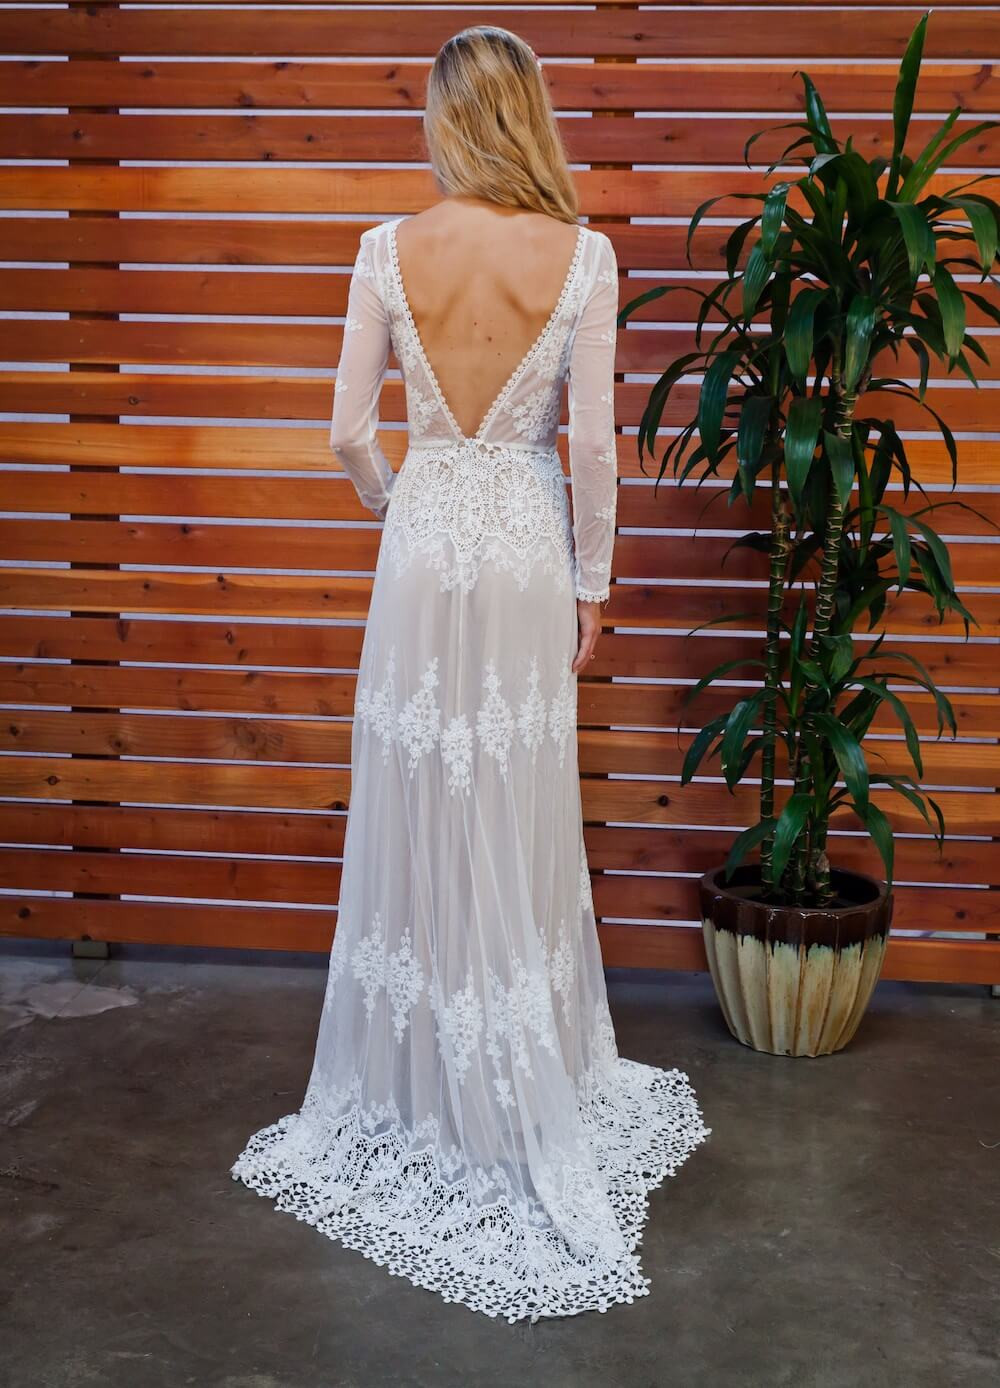 Long Sleeve Backless Wedding Dress
 Lisa Lace Backless Boho Wedding Dress